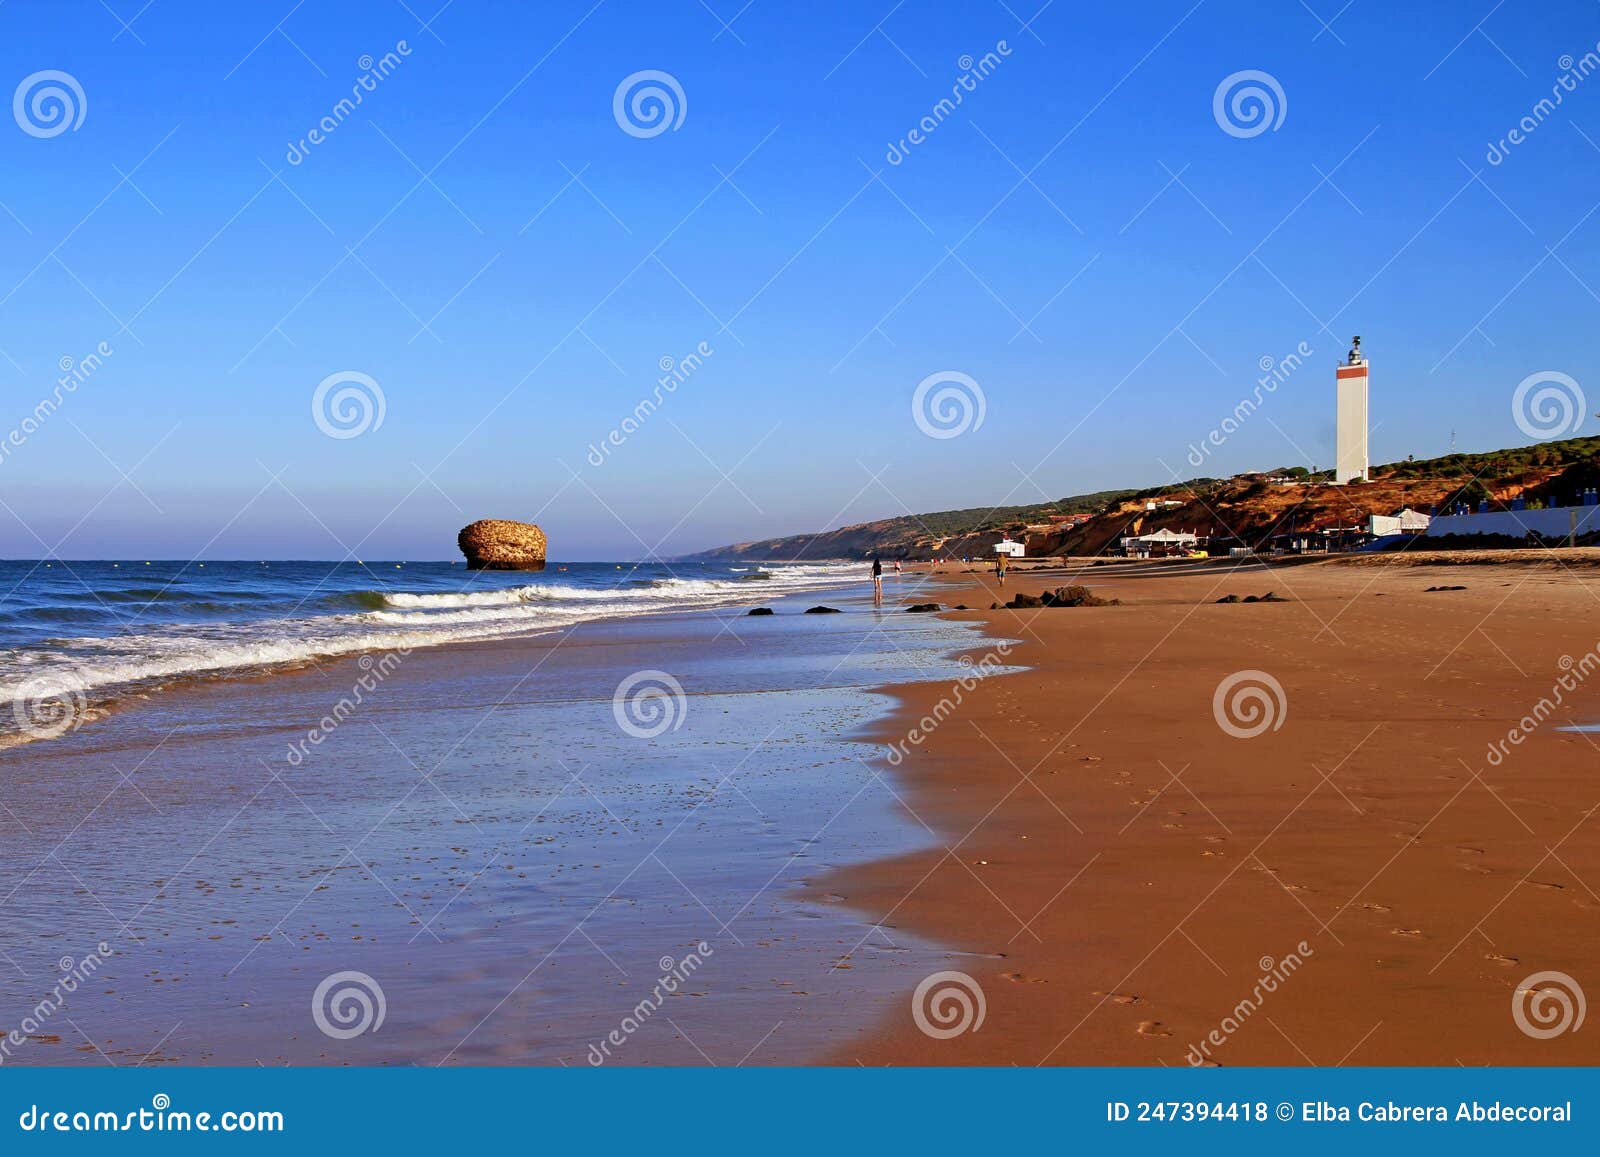 matalascaÃÂ±as beach with the lighthouse and the higuera tower